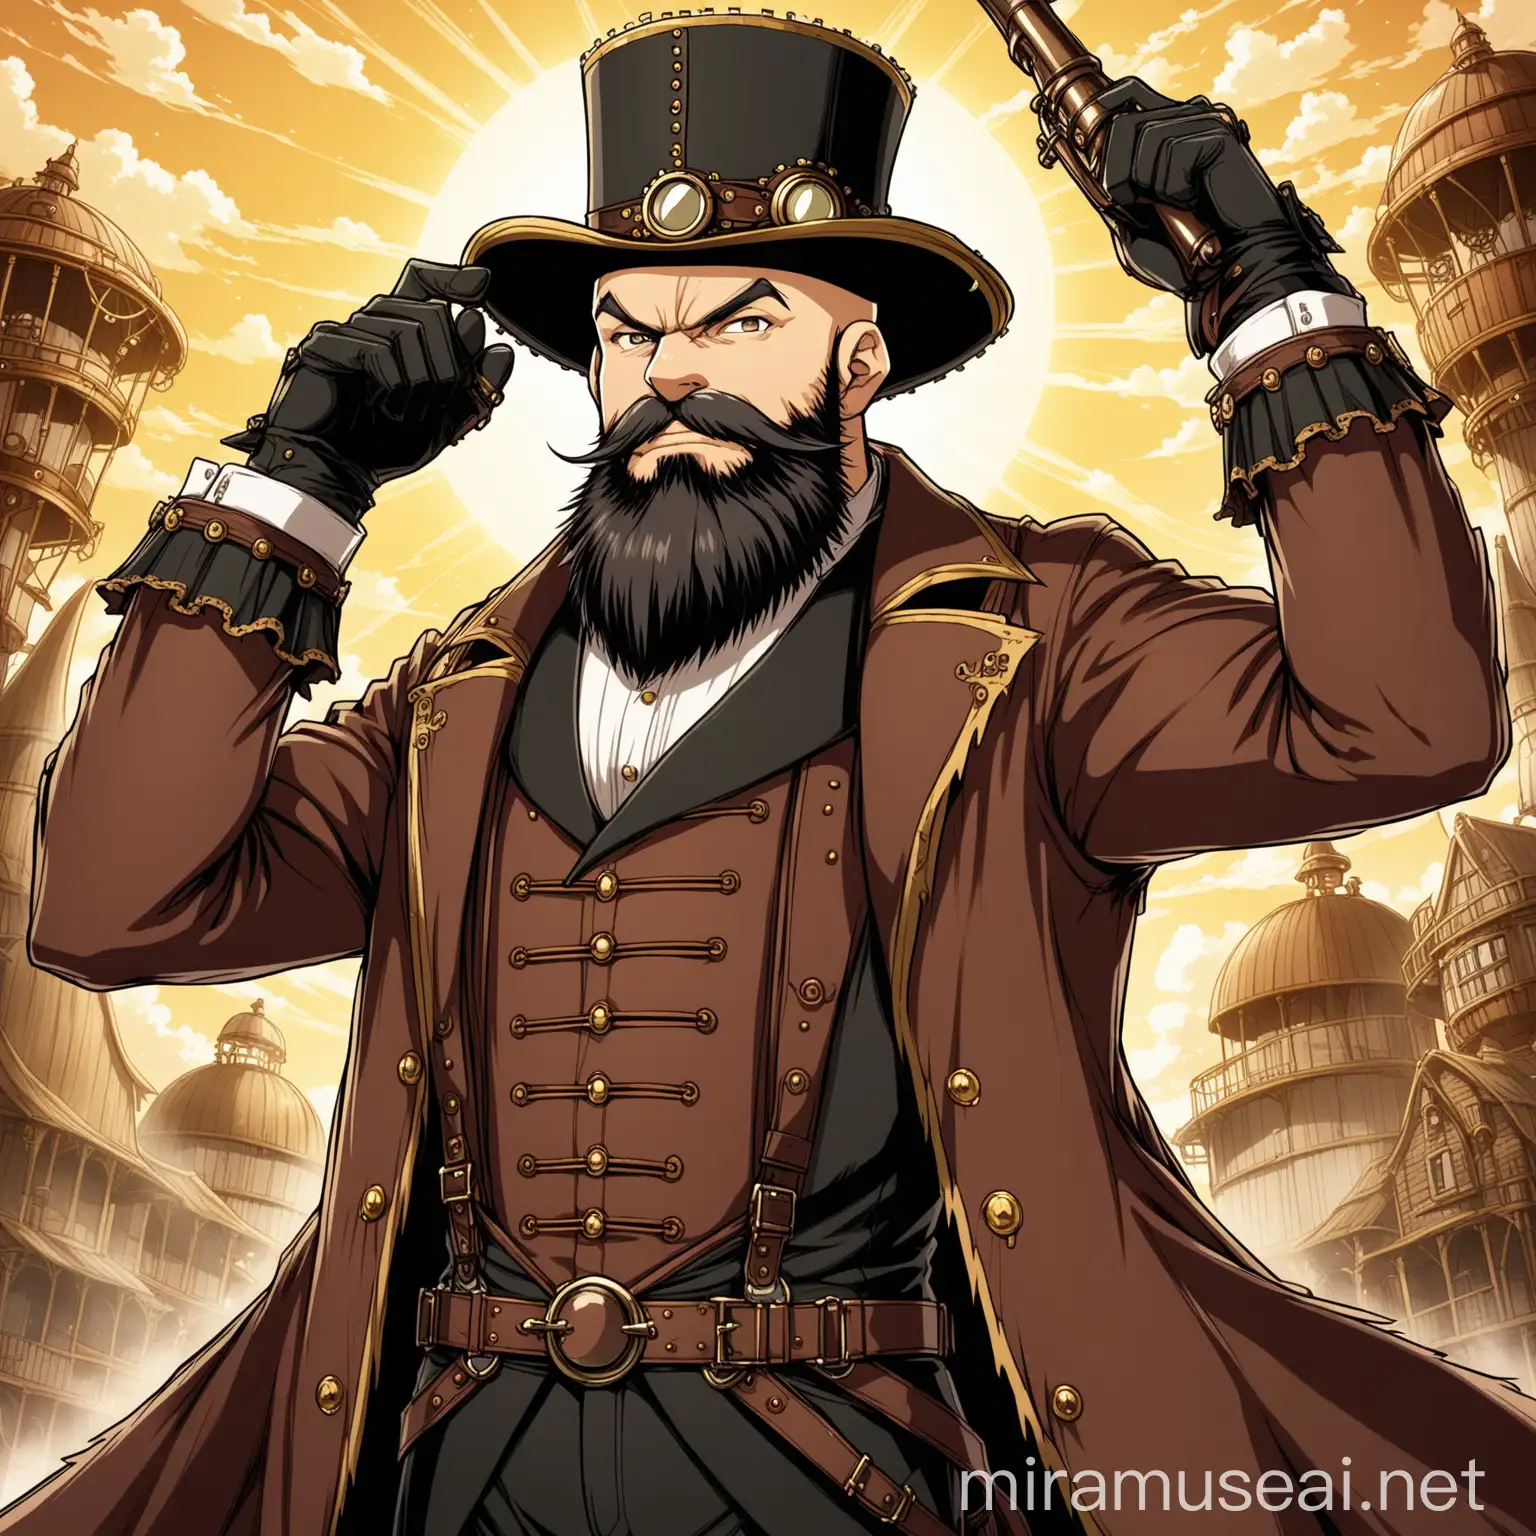 a victorian era steampunk hunter man, he is bald, he has a long black beard, he is ugly, he has a harquebus. in anime